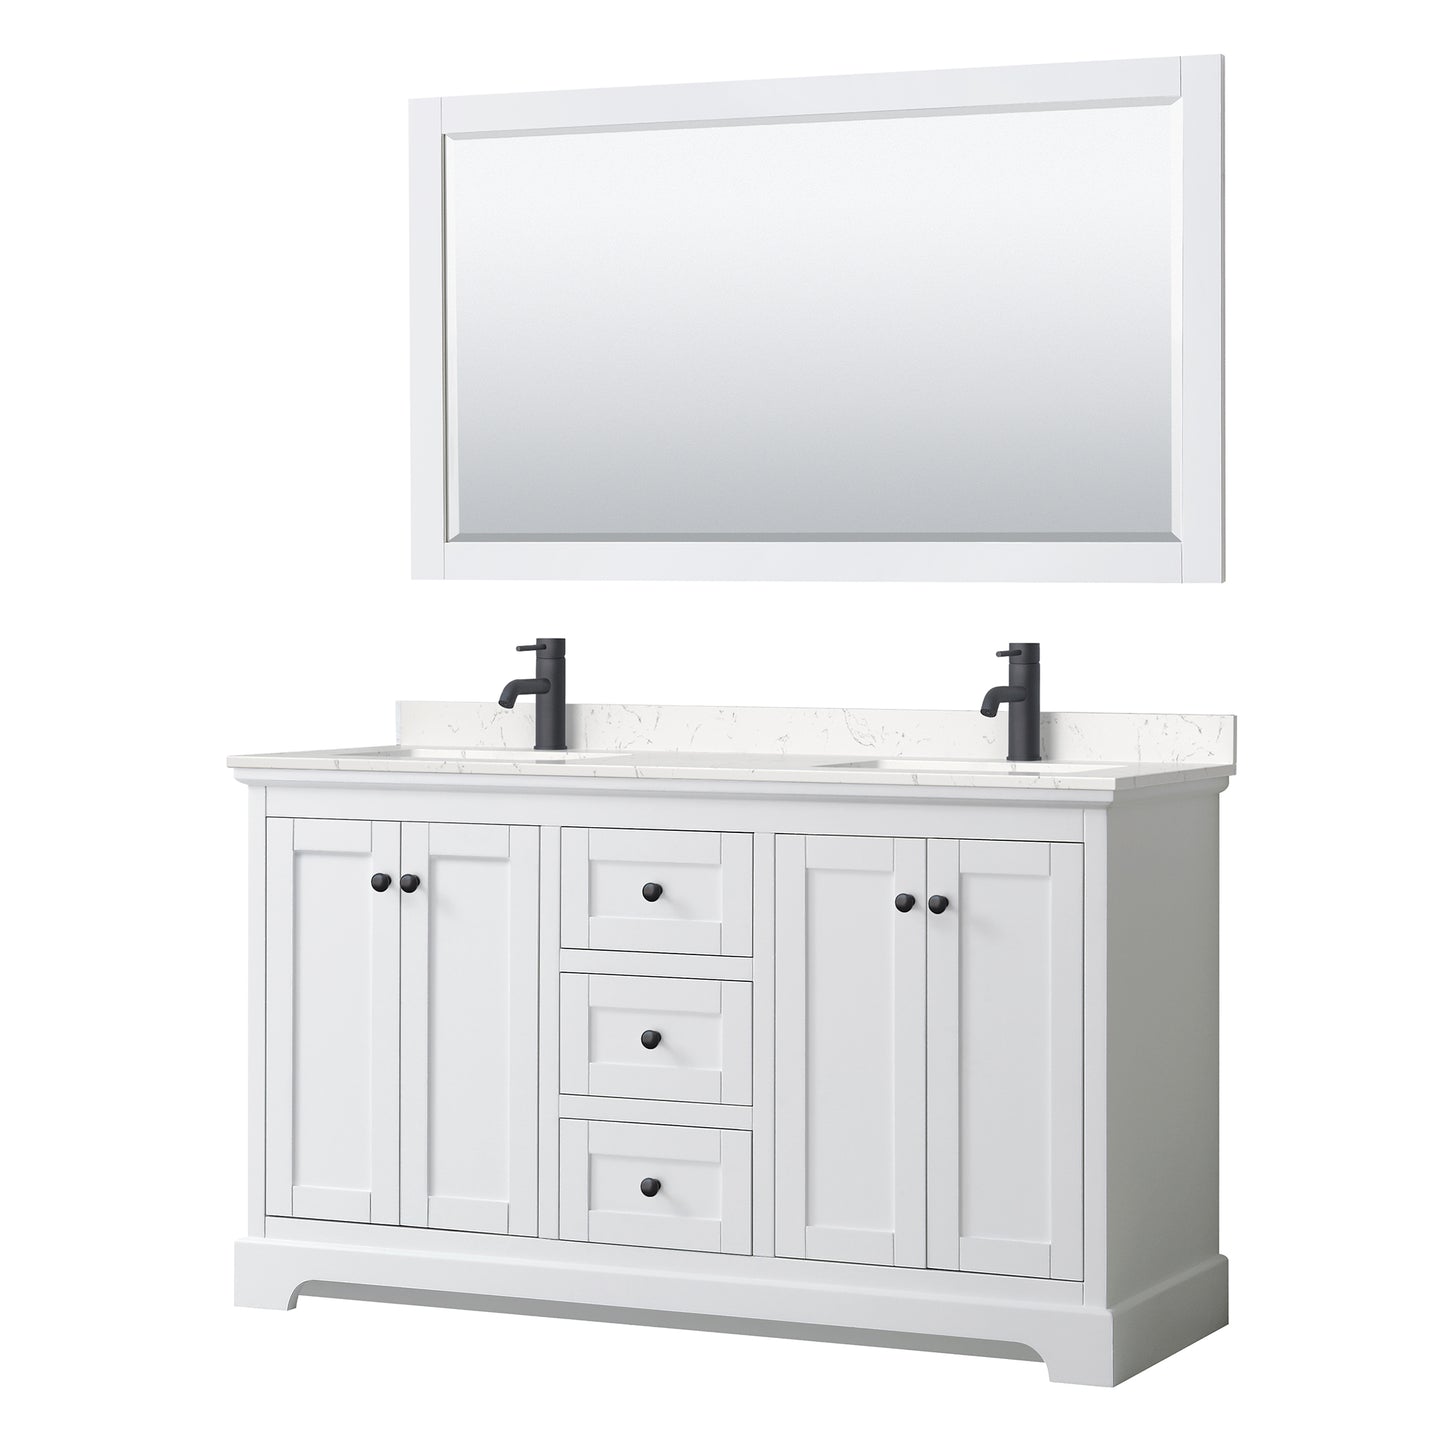 Wyndham Avery 60 Inch Double Bathroom Vanity Light-Vein Carrara Cultured Marble Countertop, Undermount Square Sinks in Matte Black Trim with 58 Inch Mirror - Luxe Bathroom Vanities